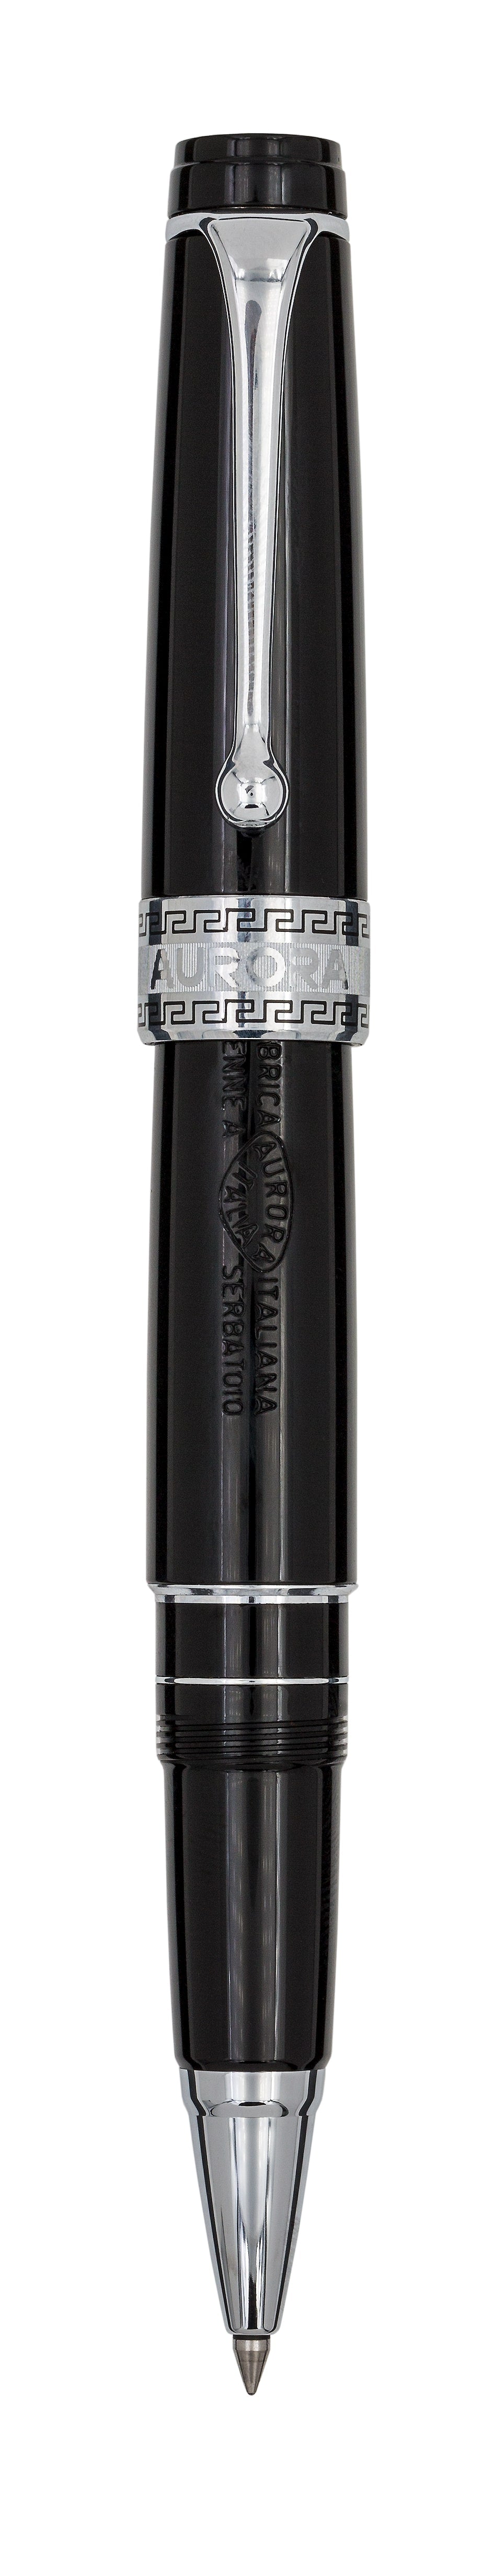 Aurora Optima Black with Chrome Trims Rollerball Pen